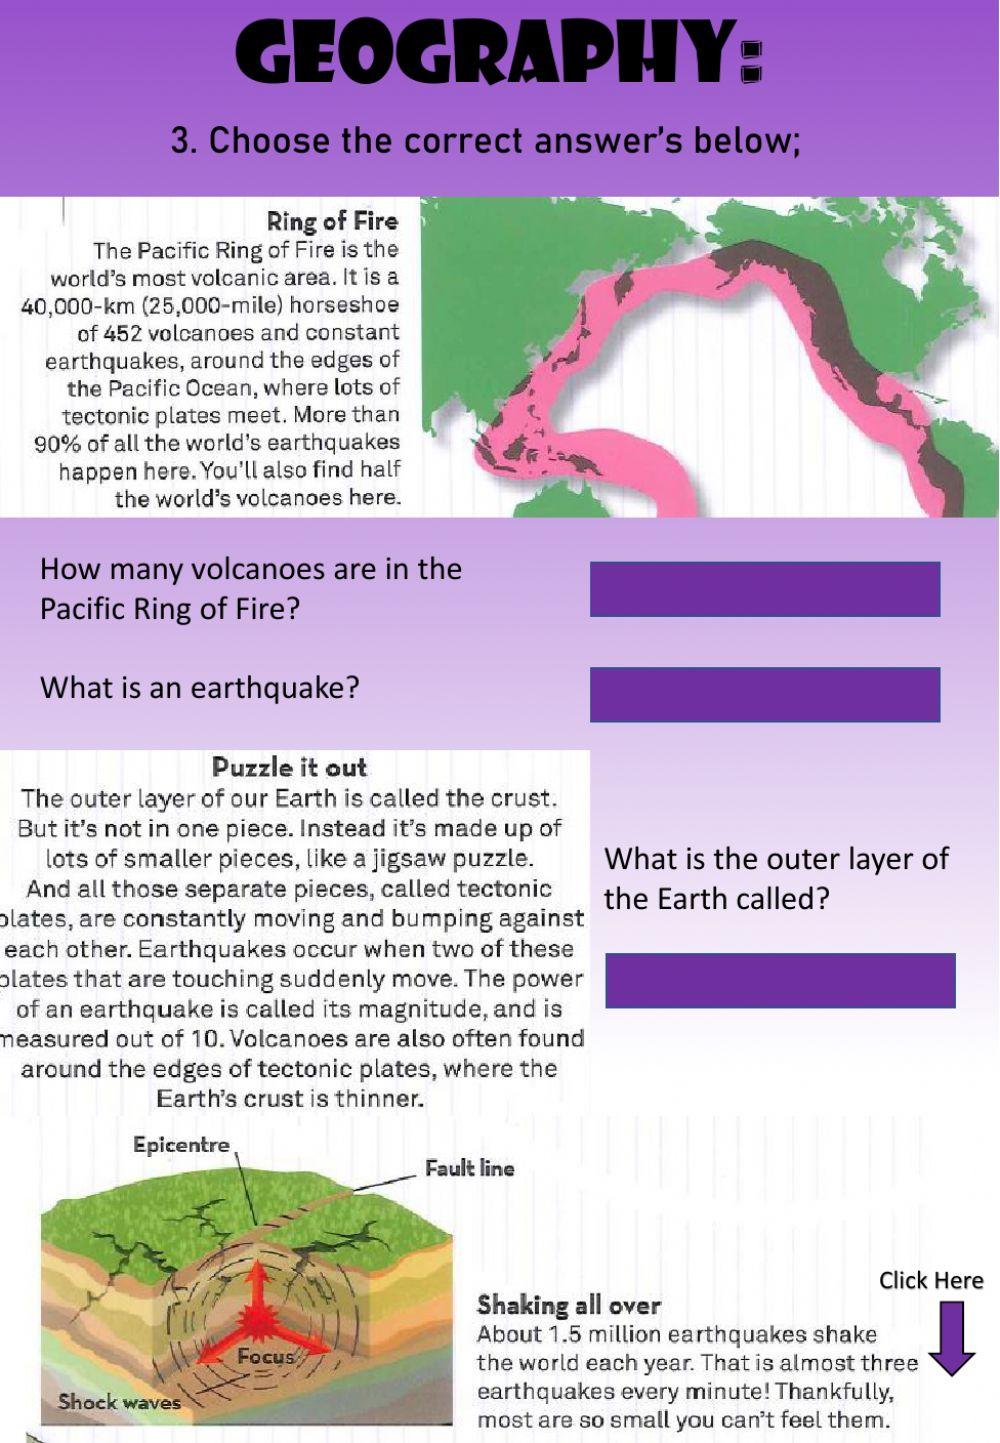 WEEK 19: TUESDAY: Earthquakes